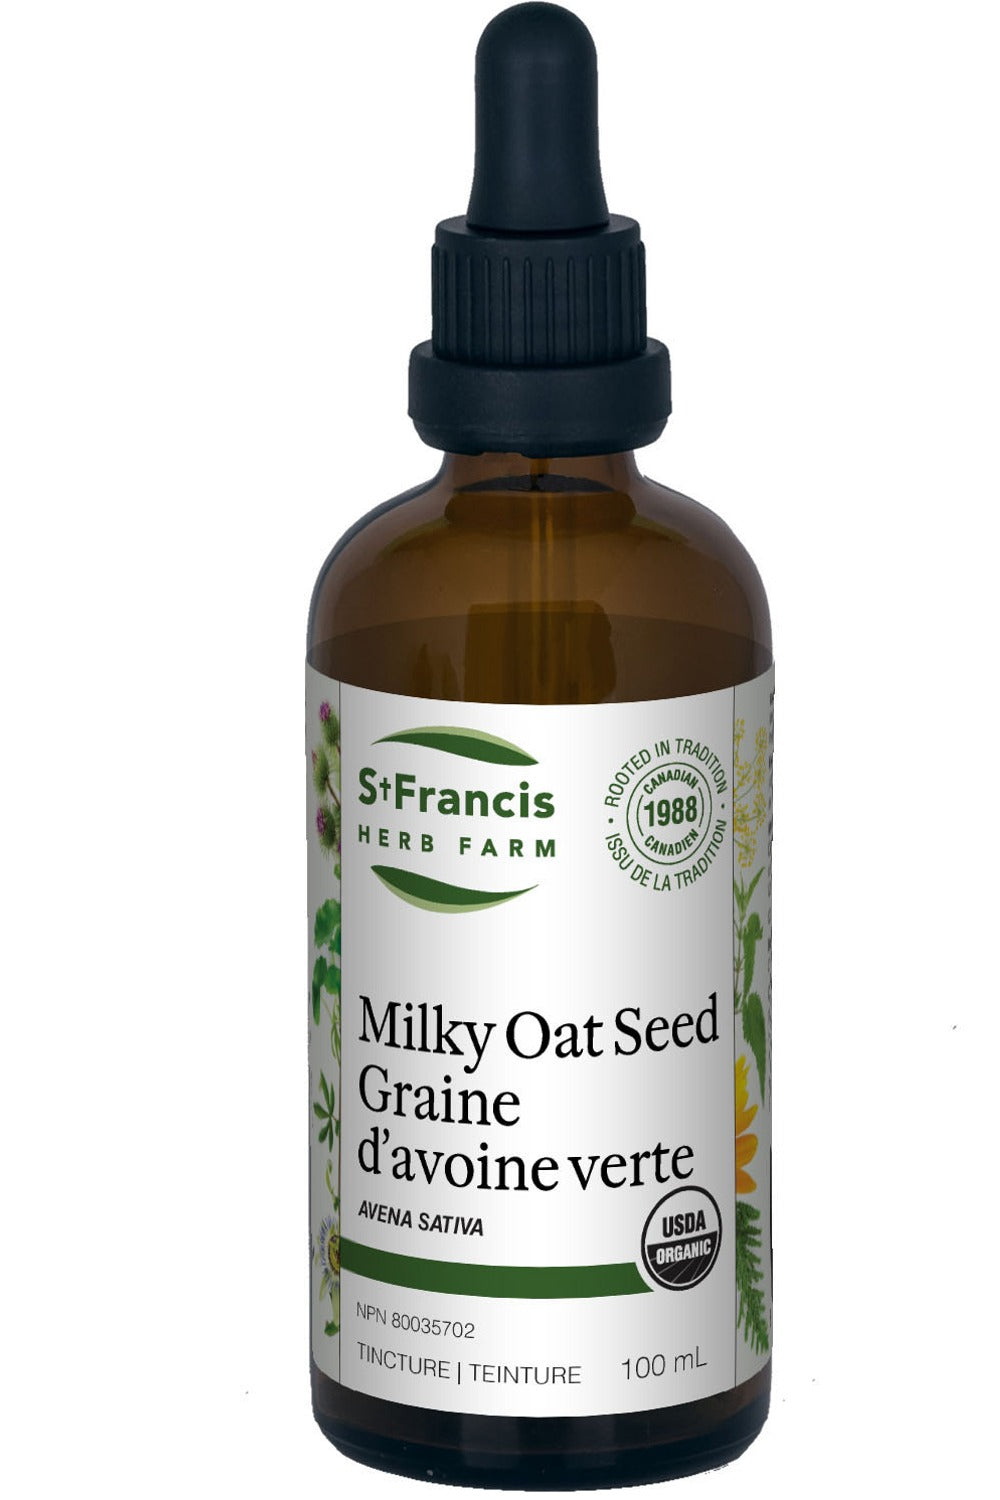 ST FRANCIS HERB FARM Milky Oat Seed (100 ml)